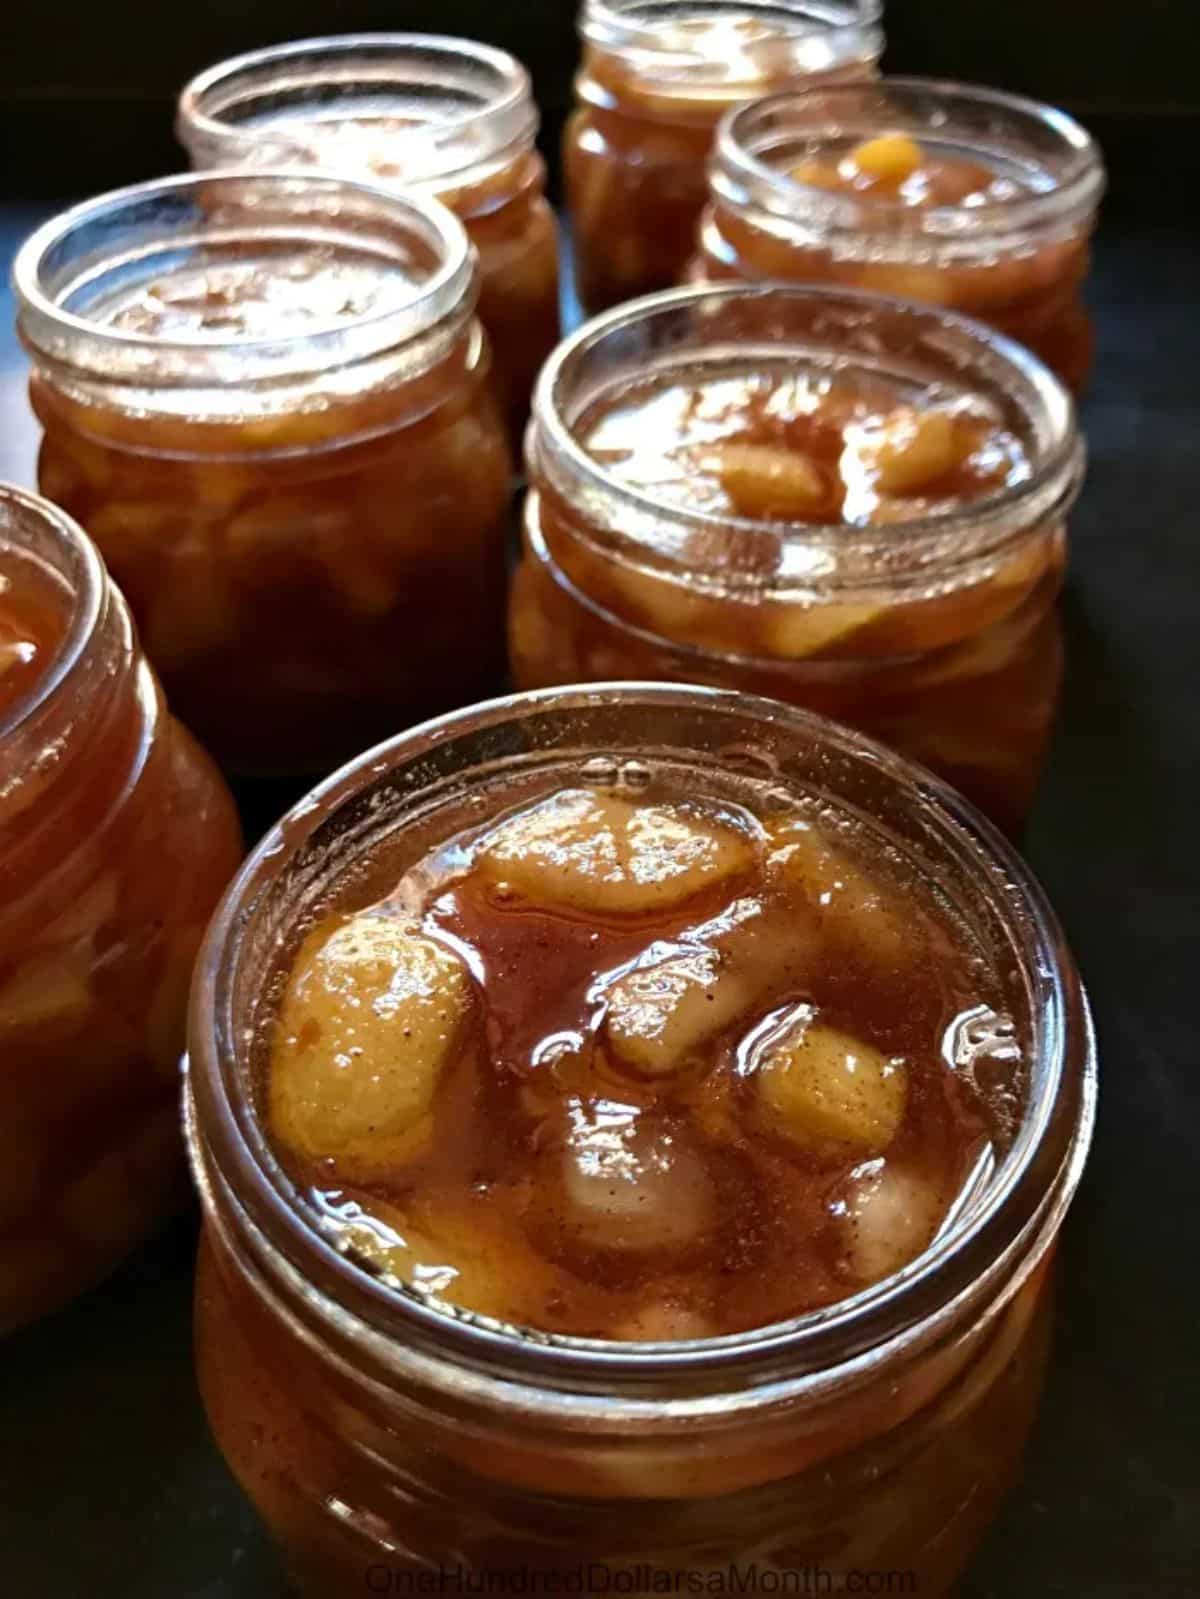 Spiced pear jam in glass jars.